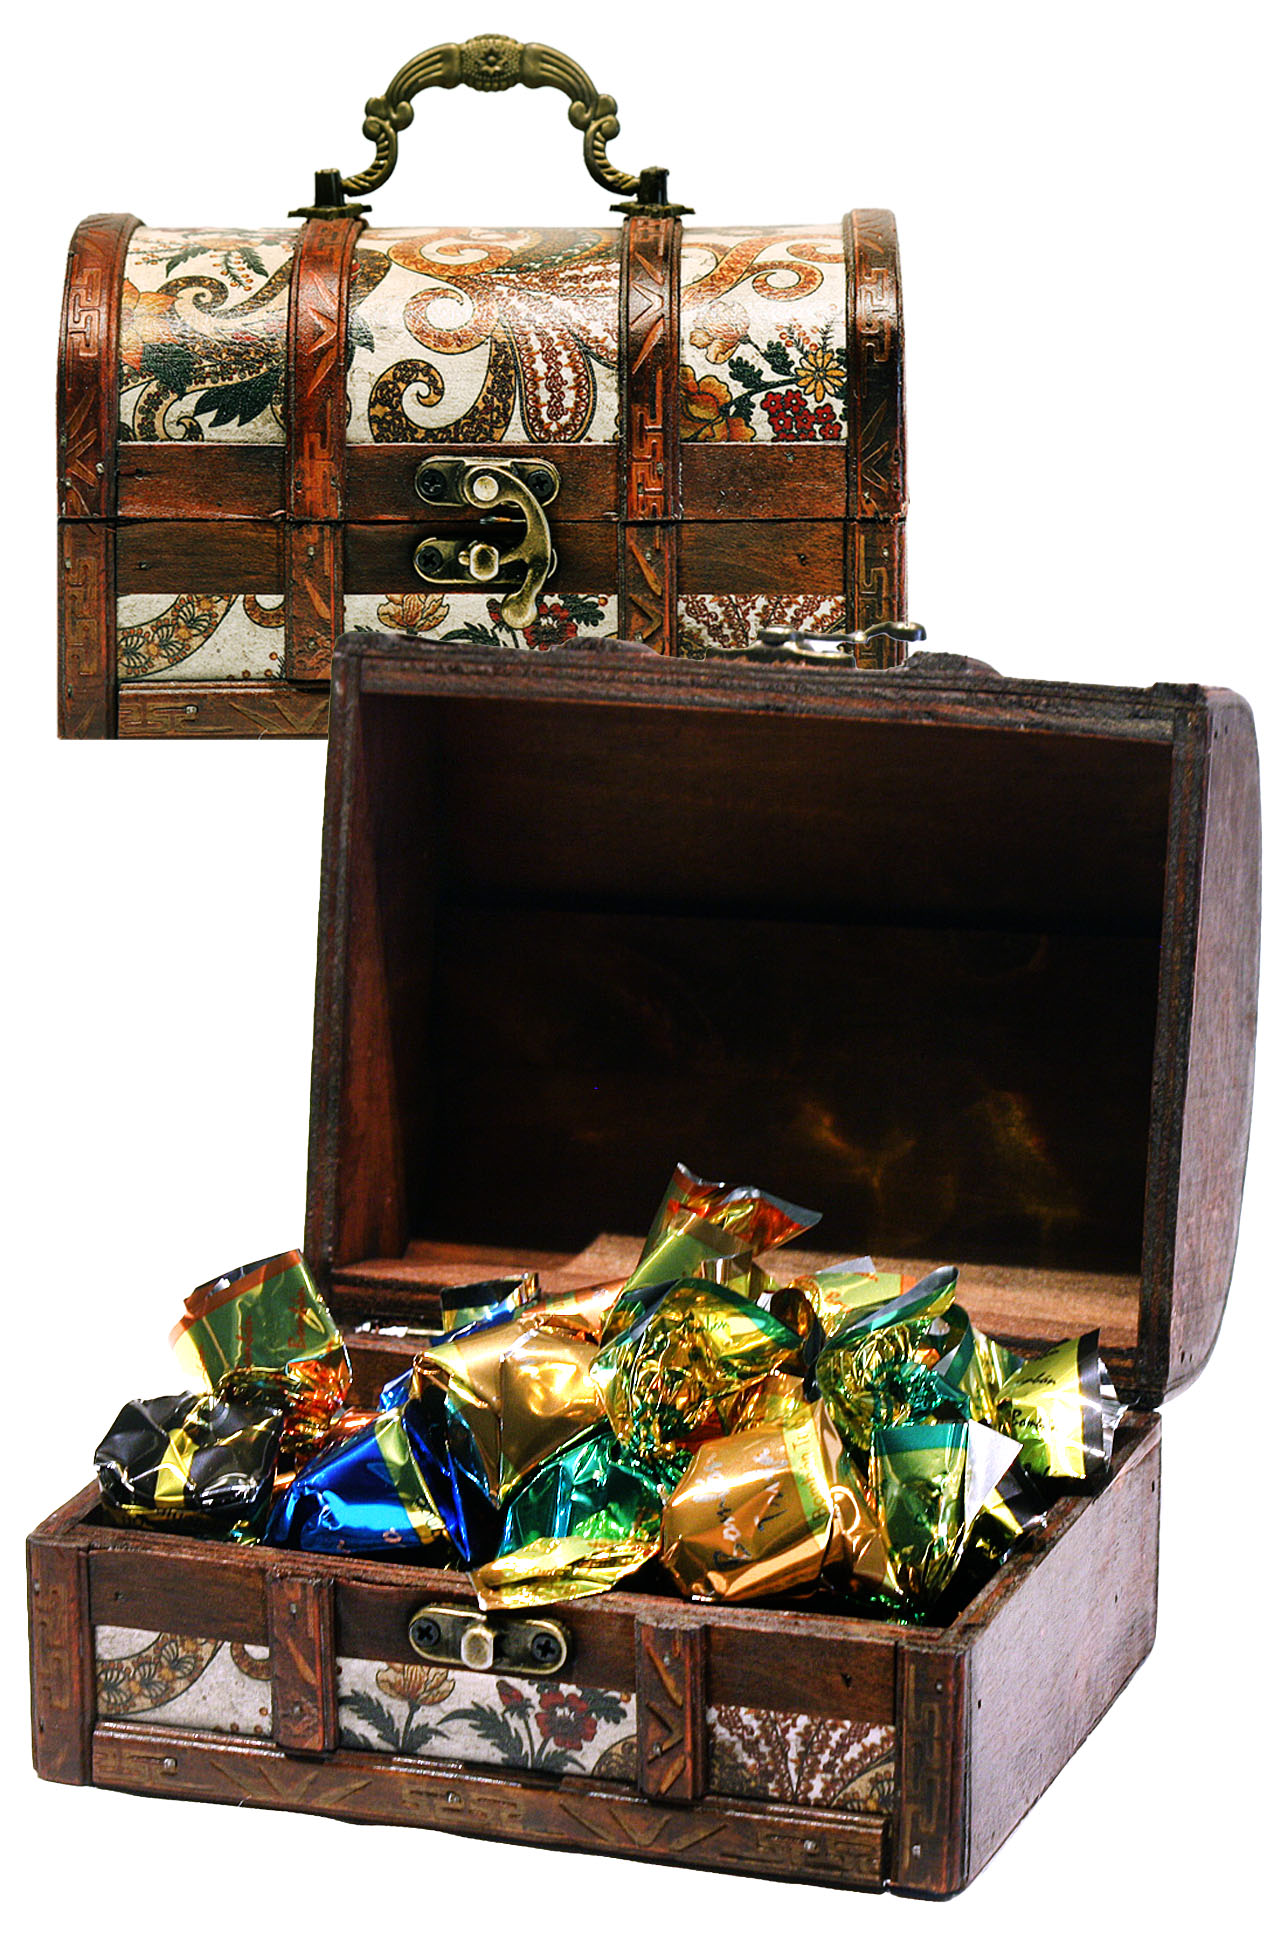   CH44-Chocolate jewelry box